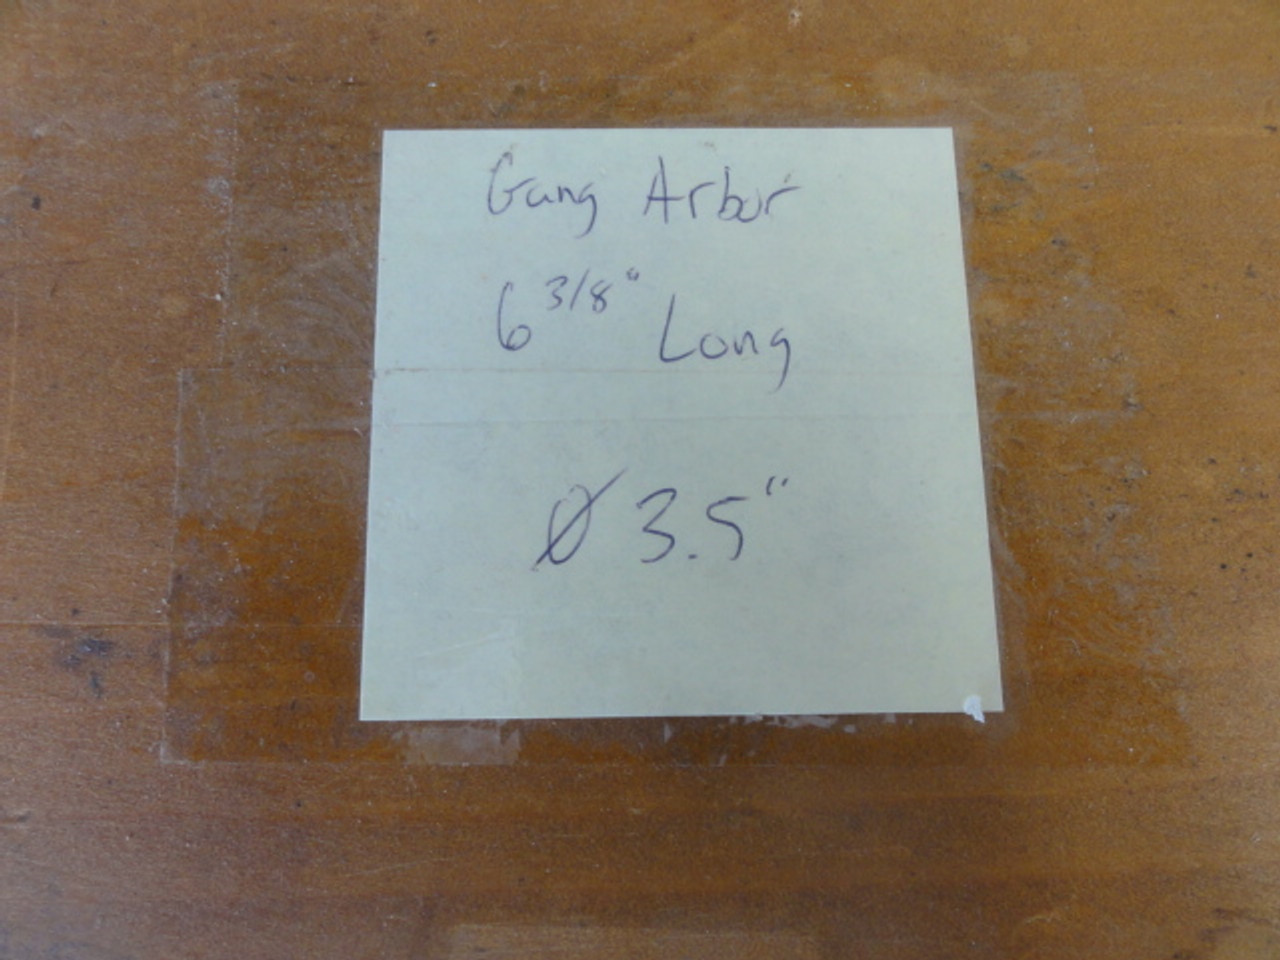 MTI / Norton Dicing Saw 03.5" Gang Arbor, 6 3/8" Long w/ Box